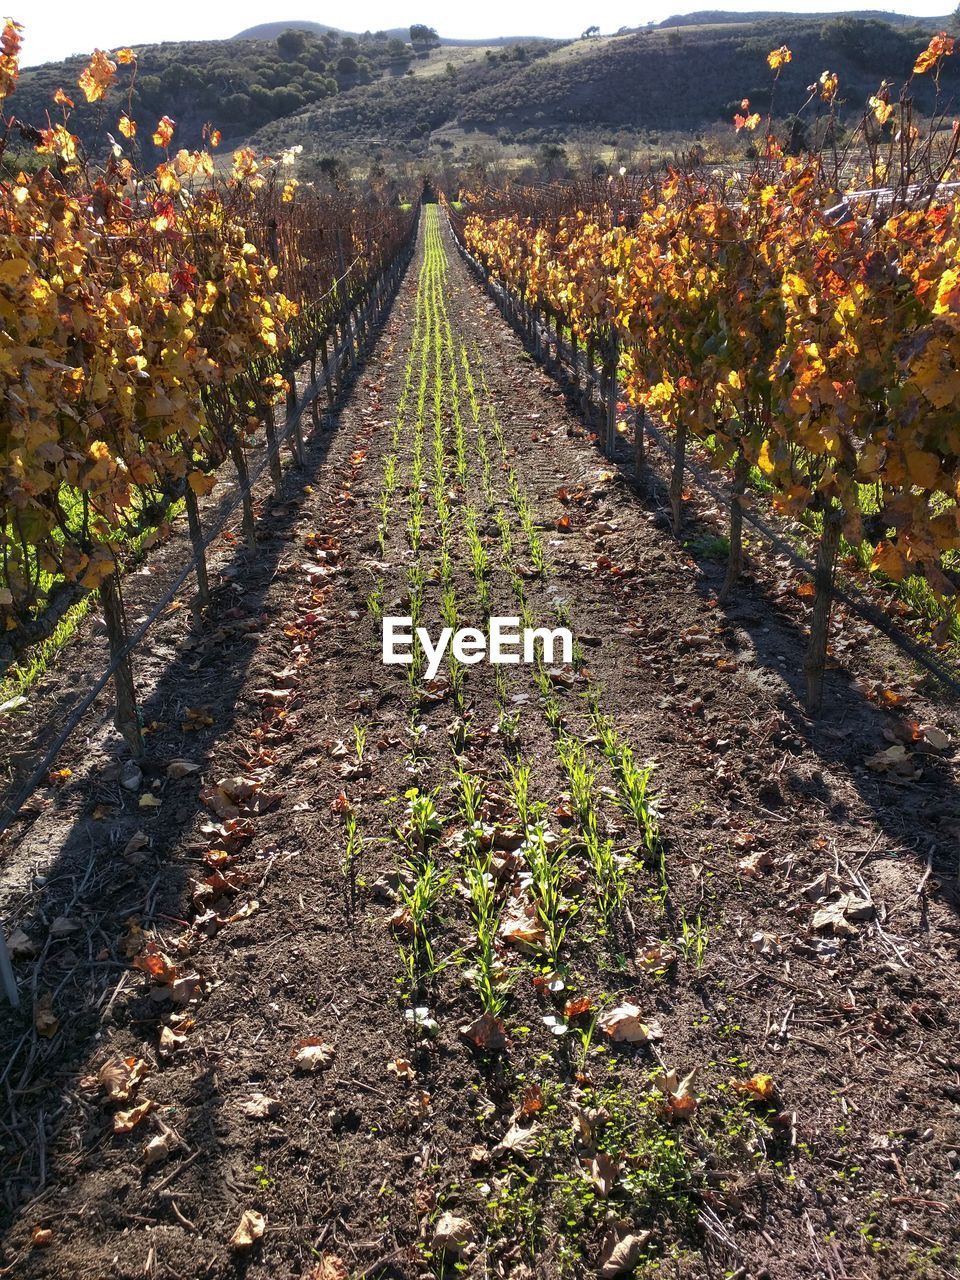 Close-up of vineyard against sky